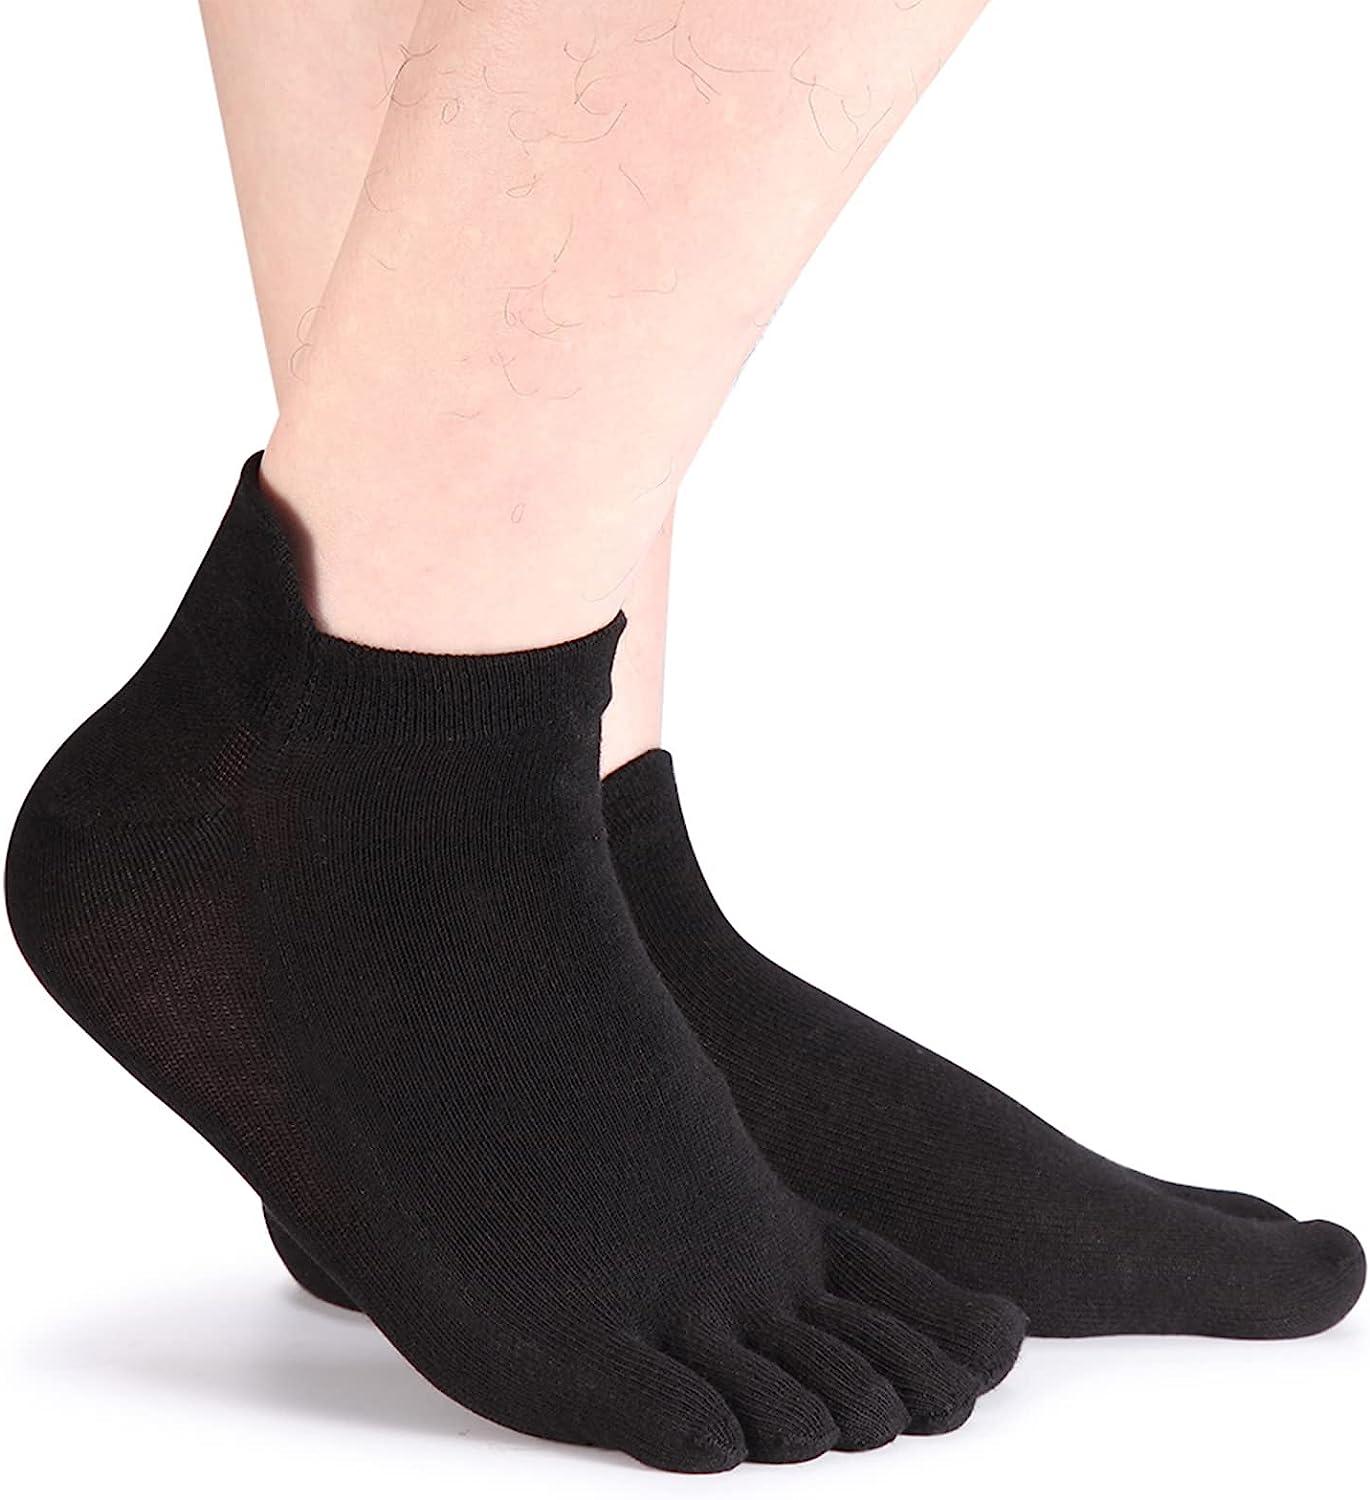 Toe Socks, 5 Fingers Cotton Mesh Wicking Socks Ankle Length Five